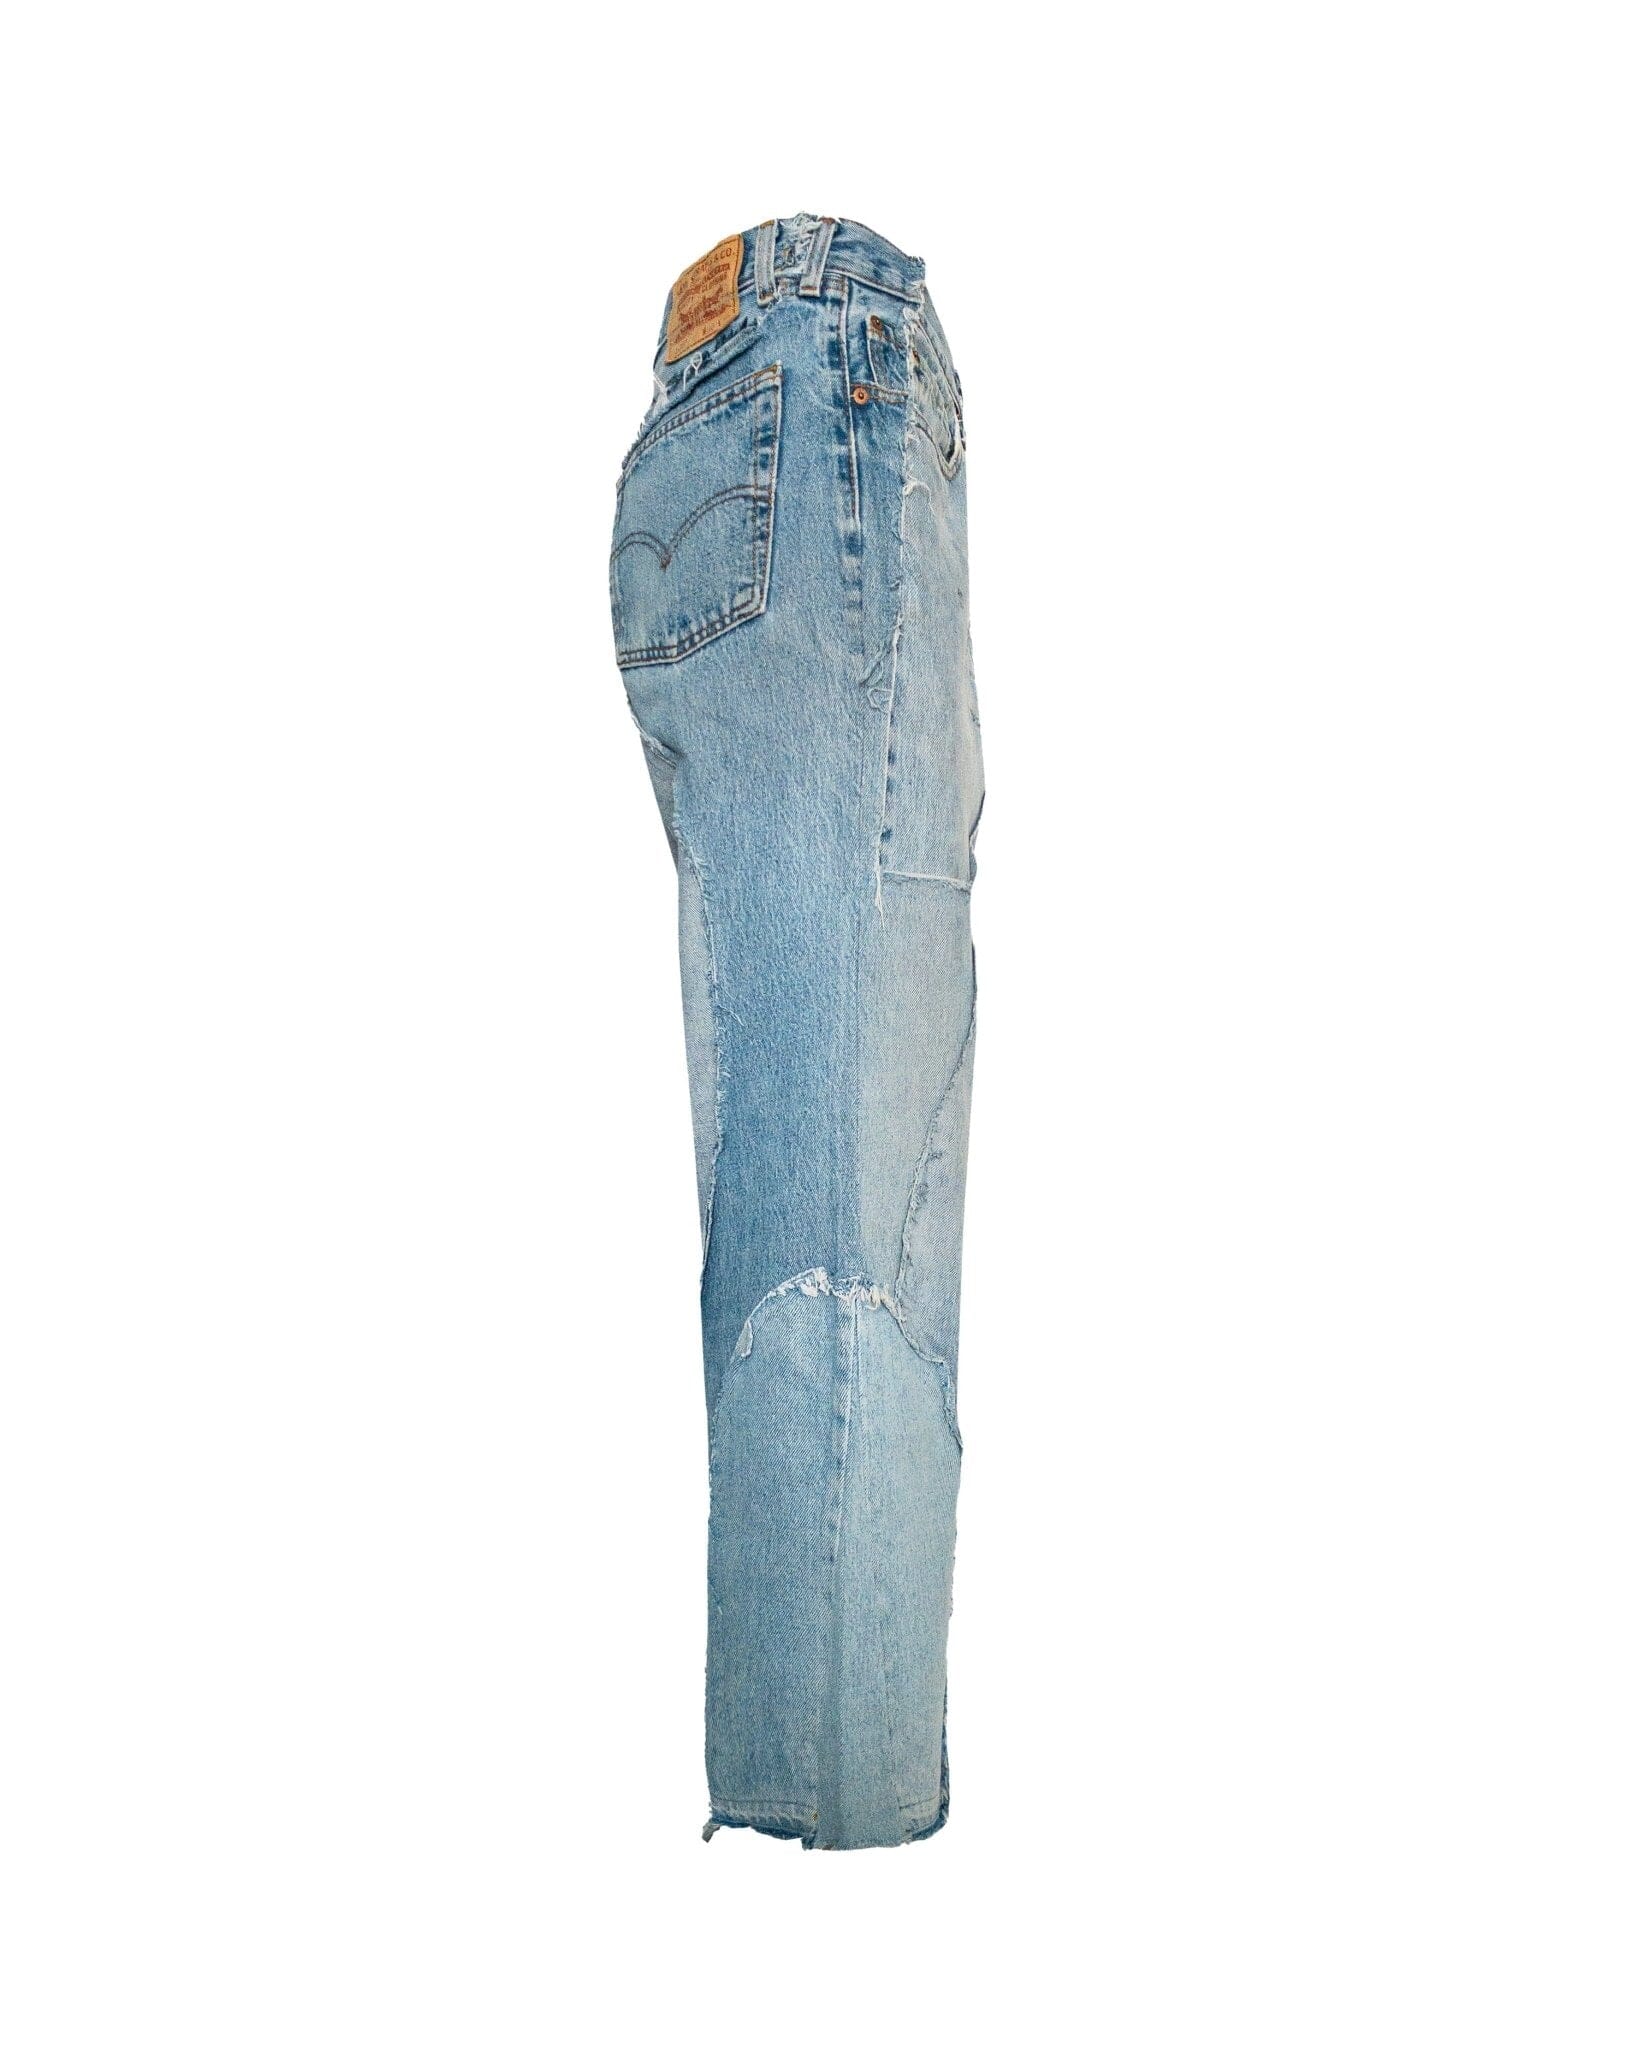 Jeans encrustration blue